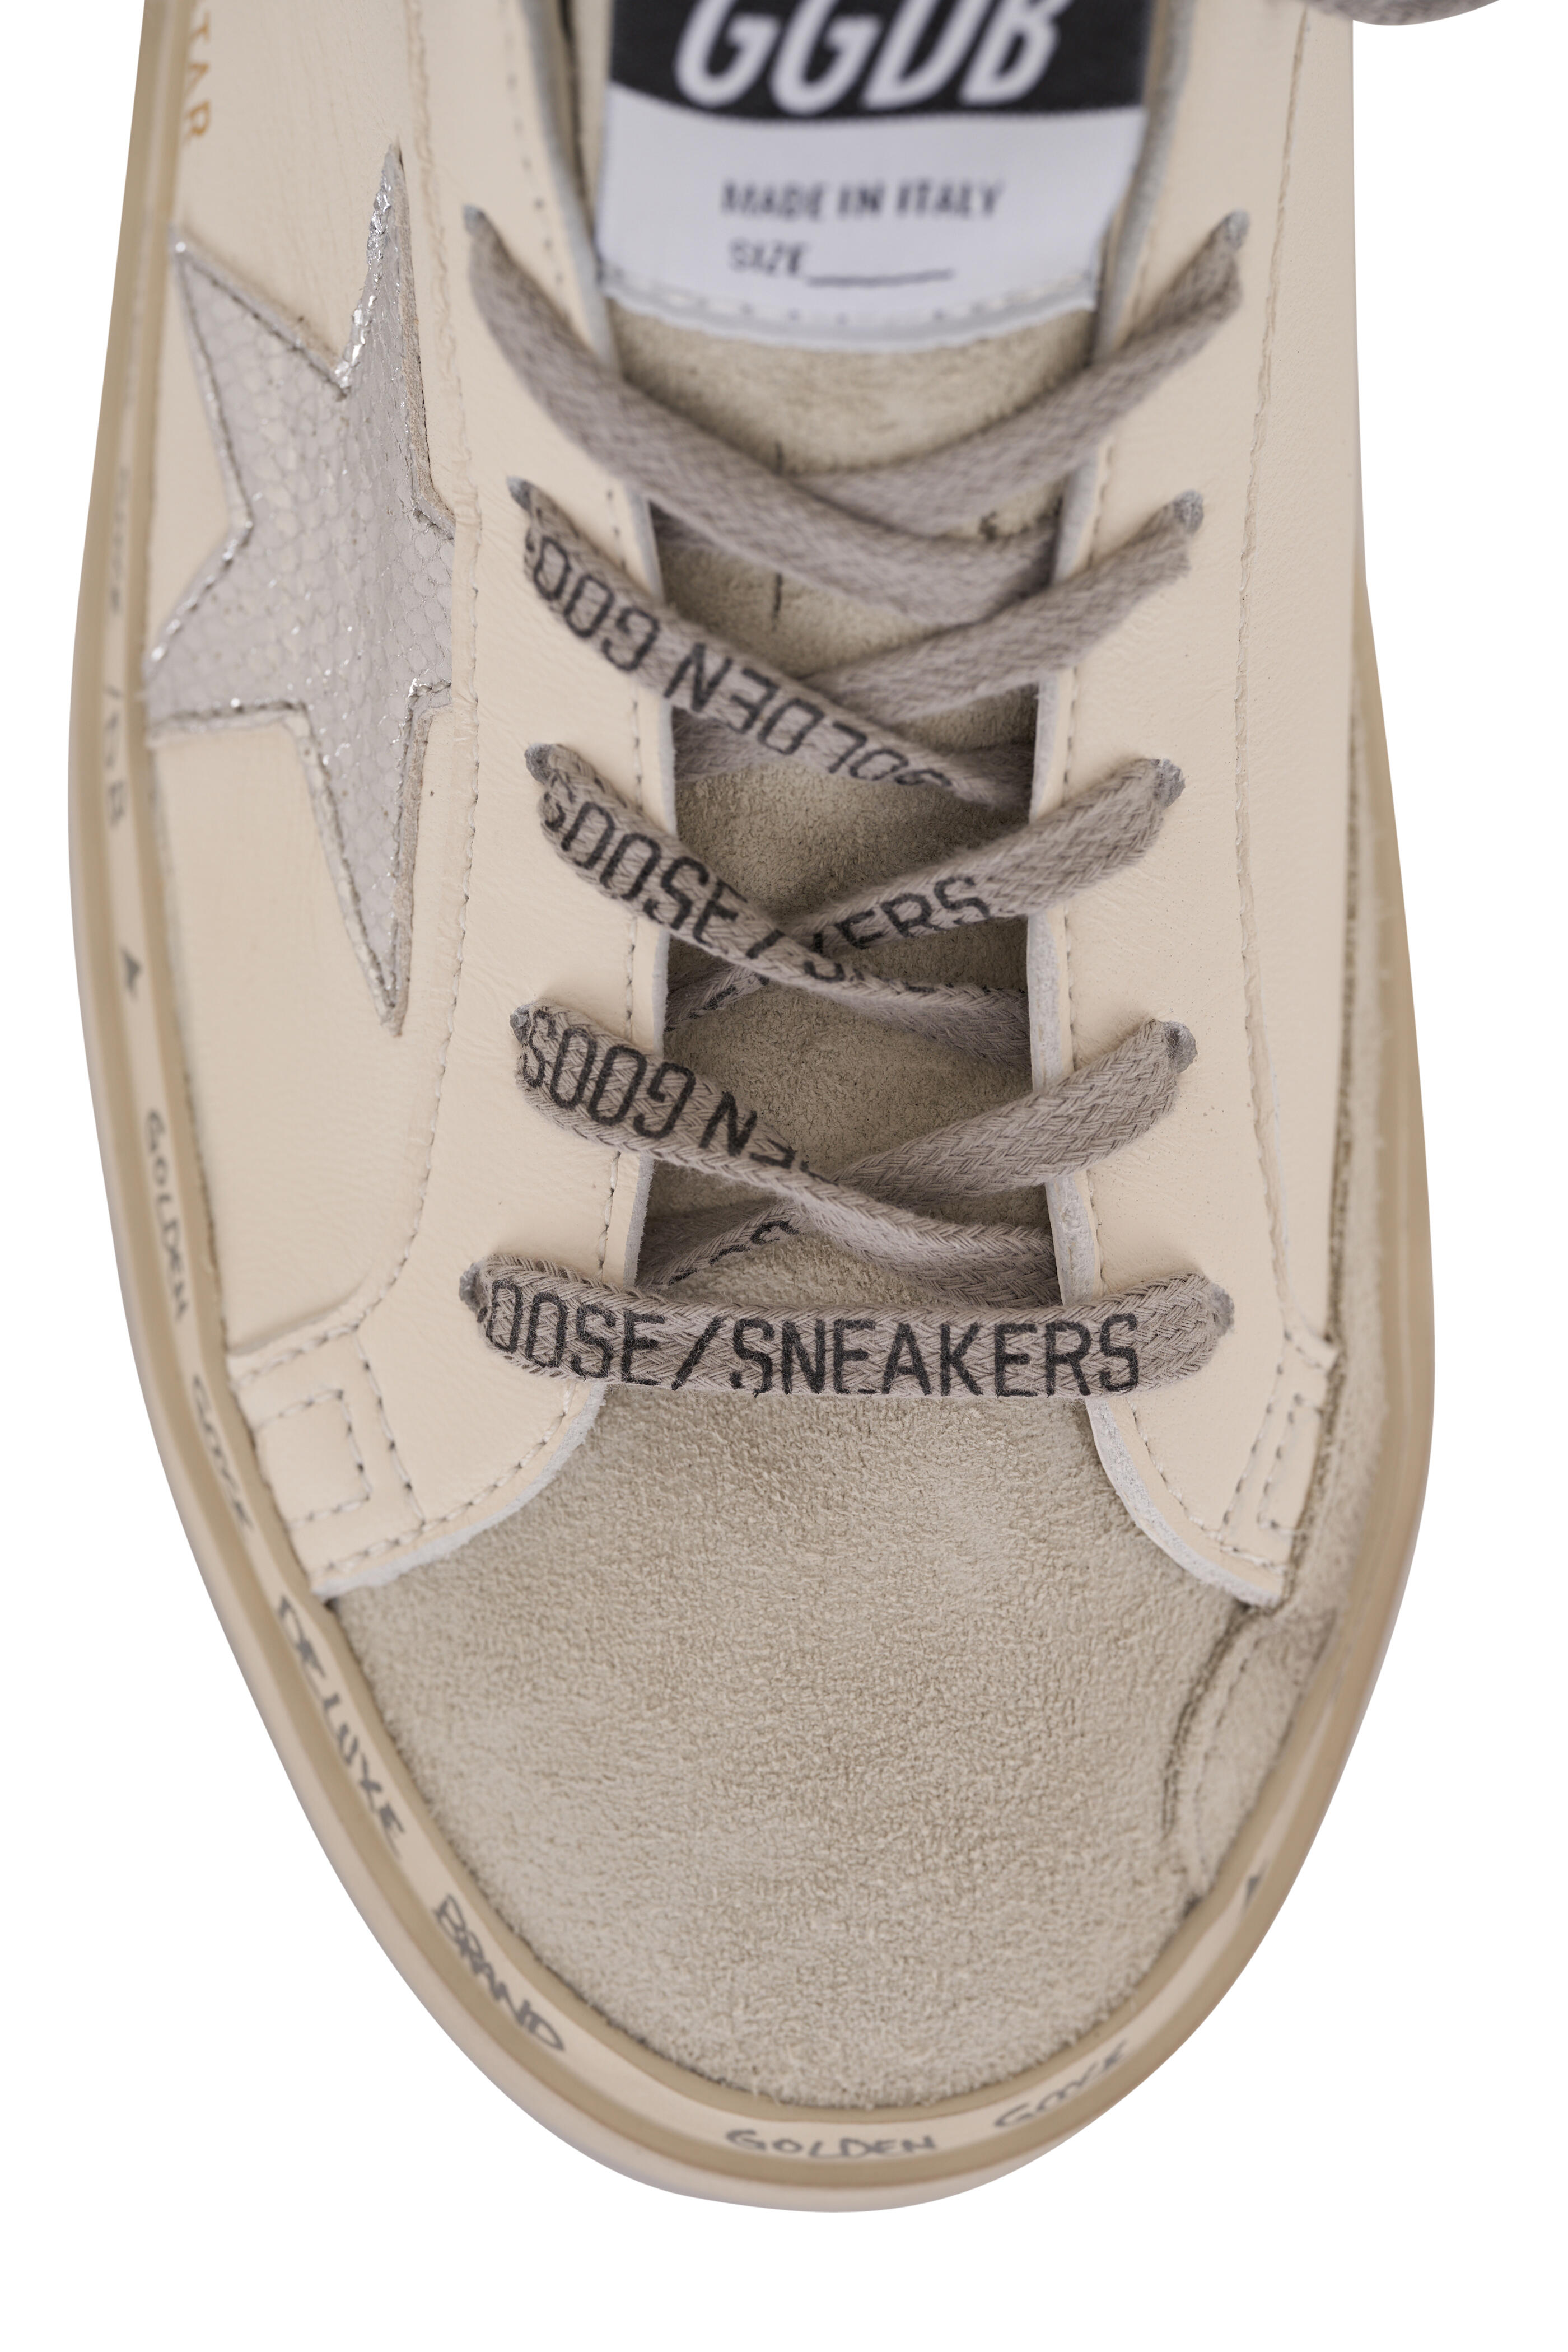 Golden Goose - Hi Star White & Silver Low Top Sneaker